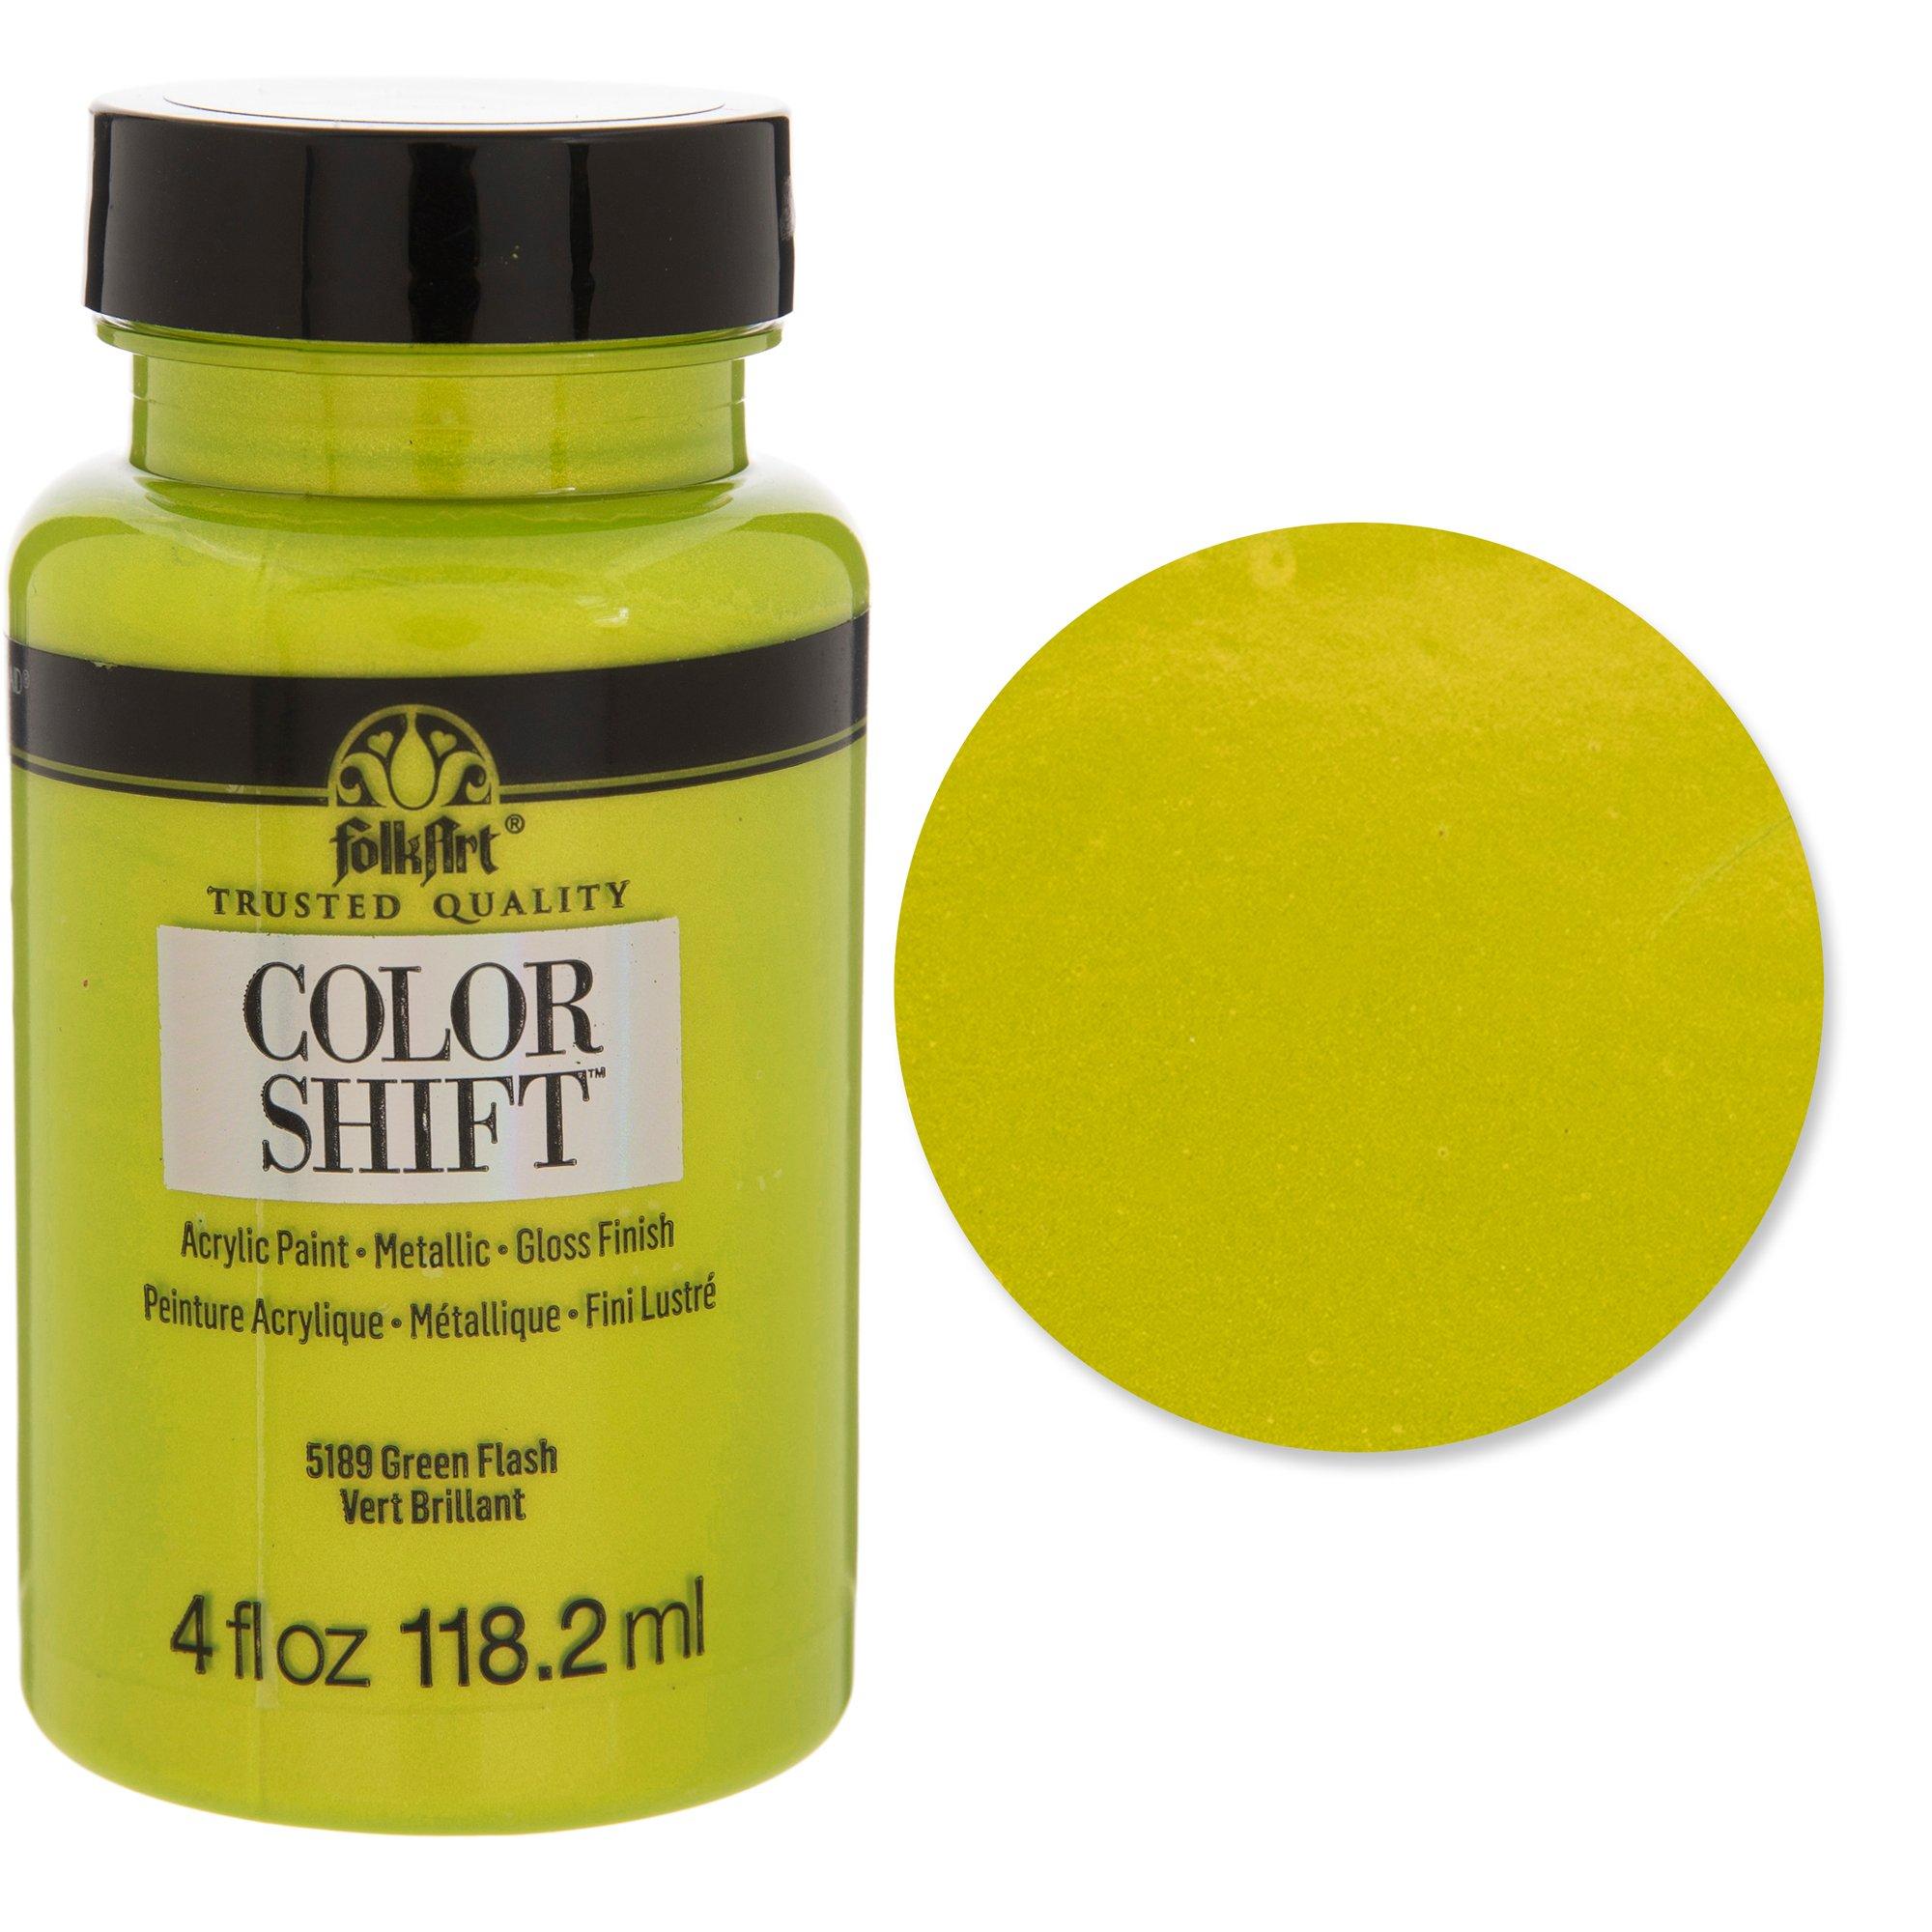 FolkArt Color Shift Acrylic Paint - Green Flash, 4 oz. - 5189